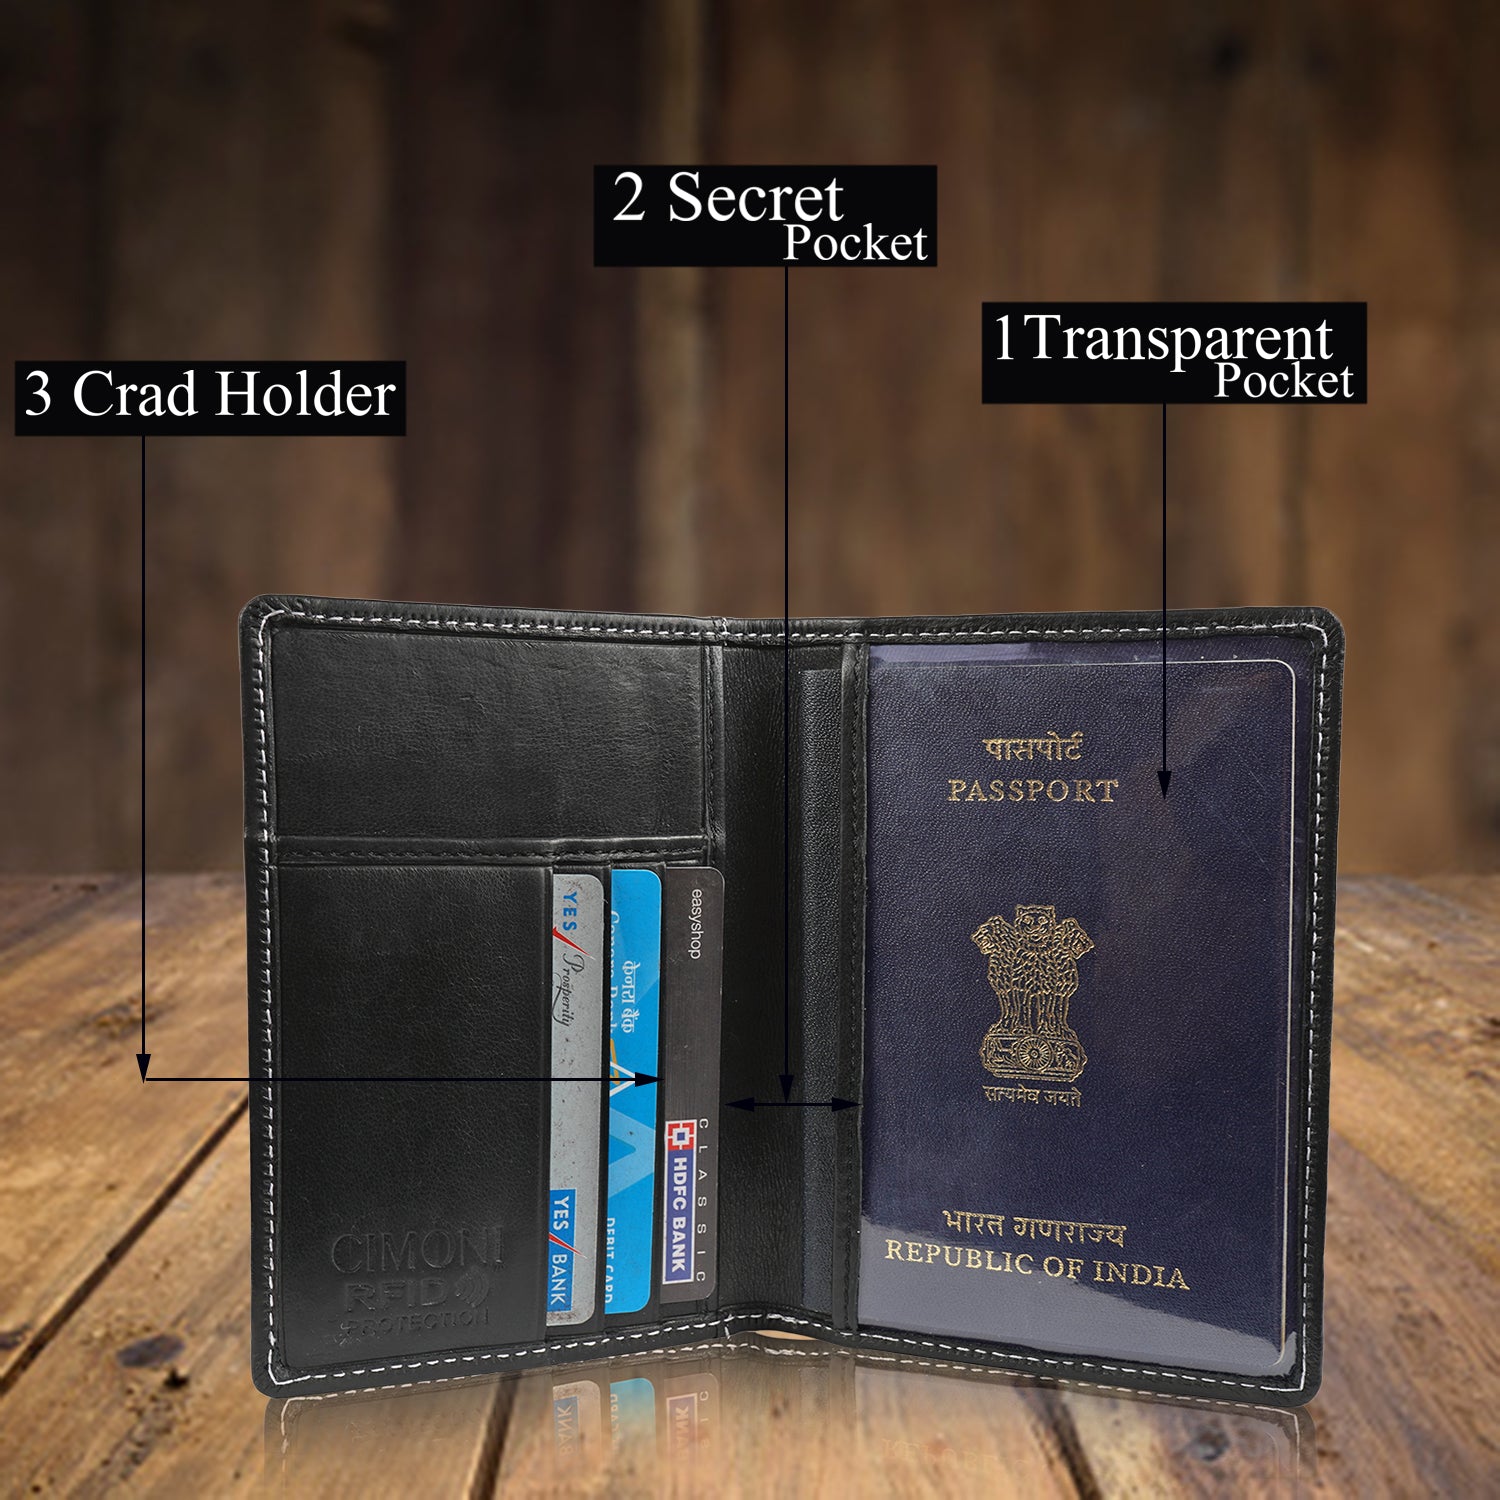 Leather Combo Gift Set Passport Holder And Luggage Tag - CIMONI 